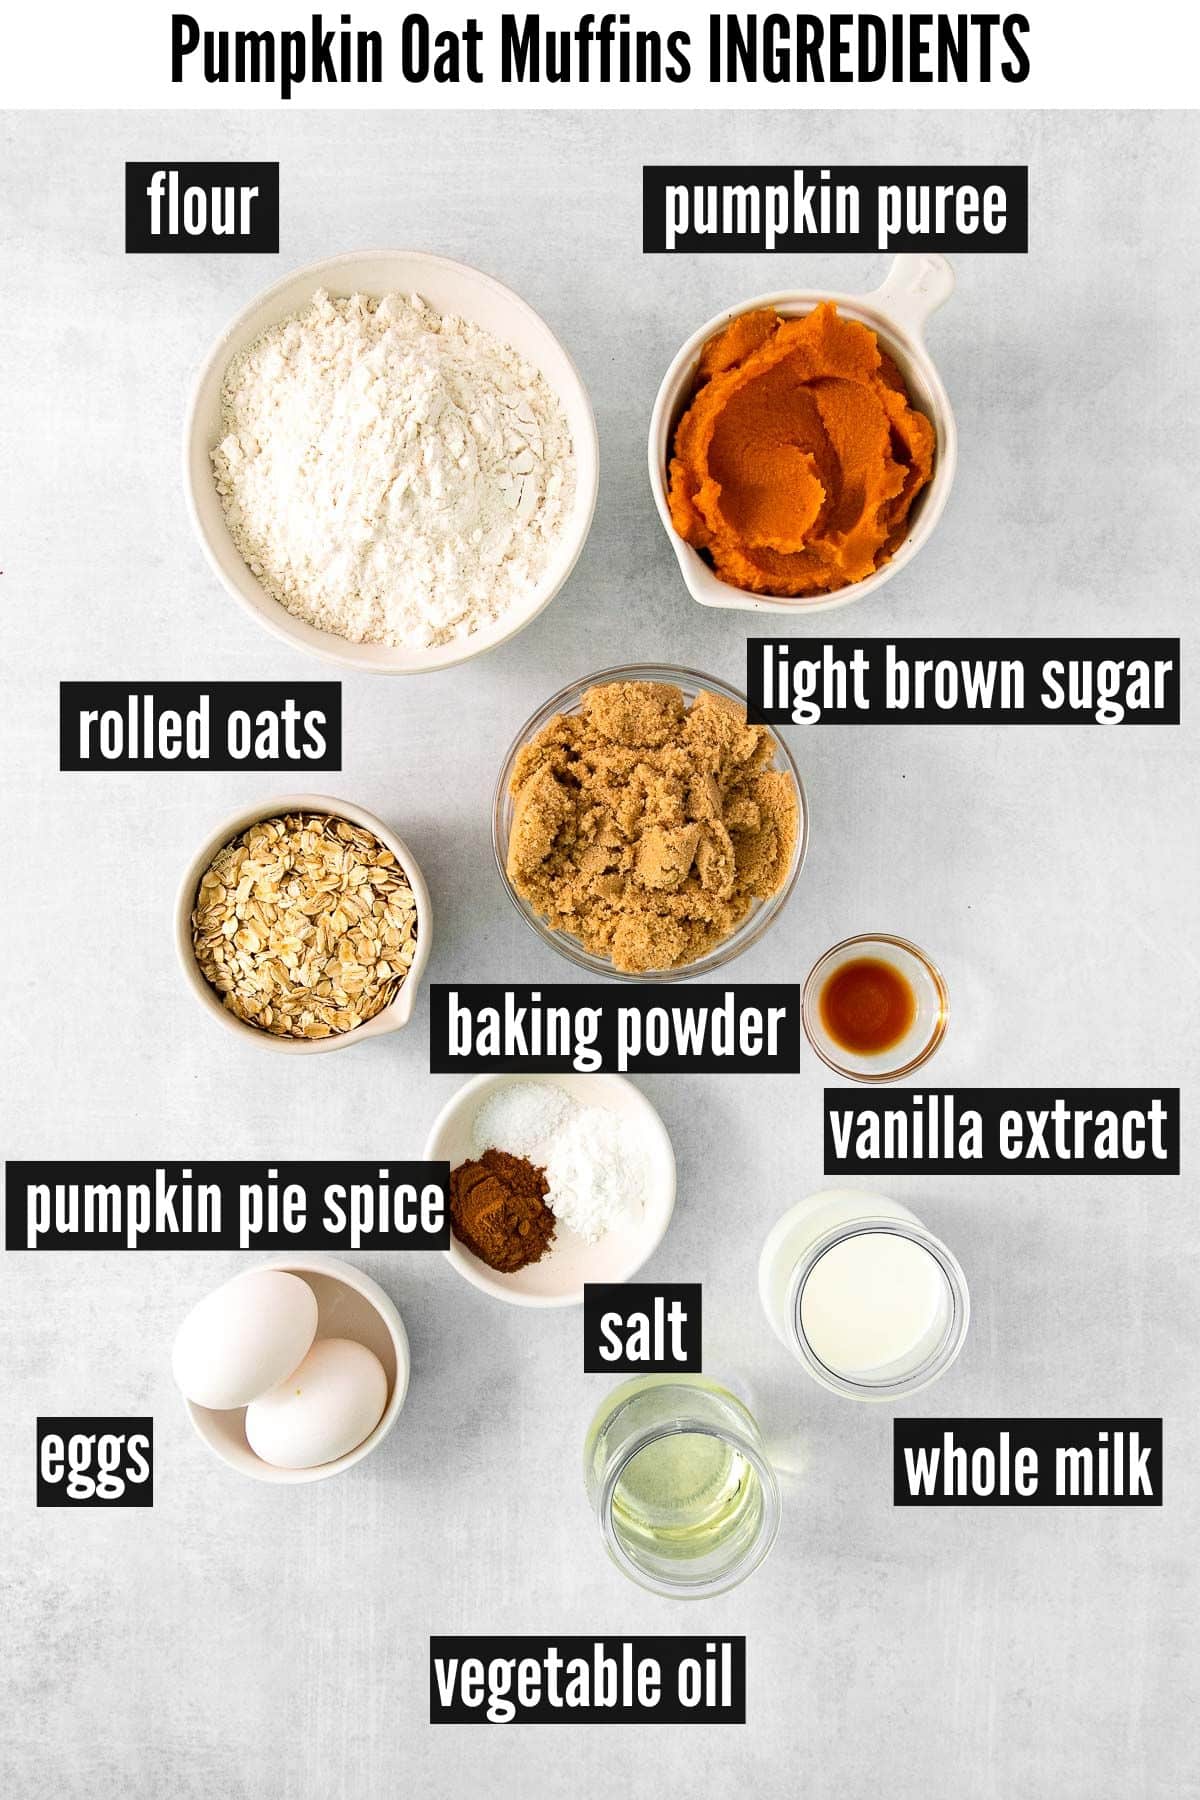 pumpkin oat muffin labelled ingredients.